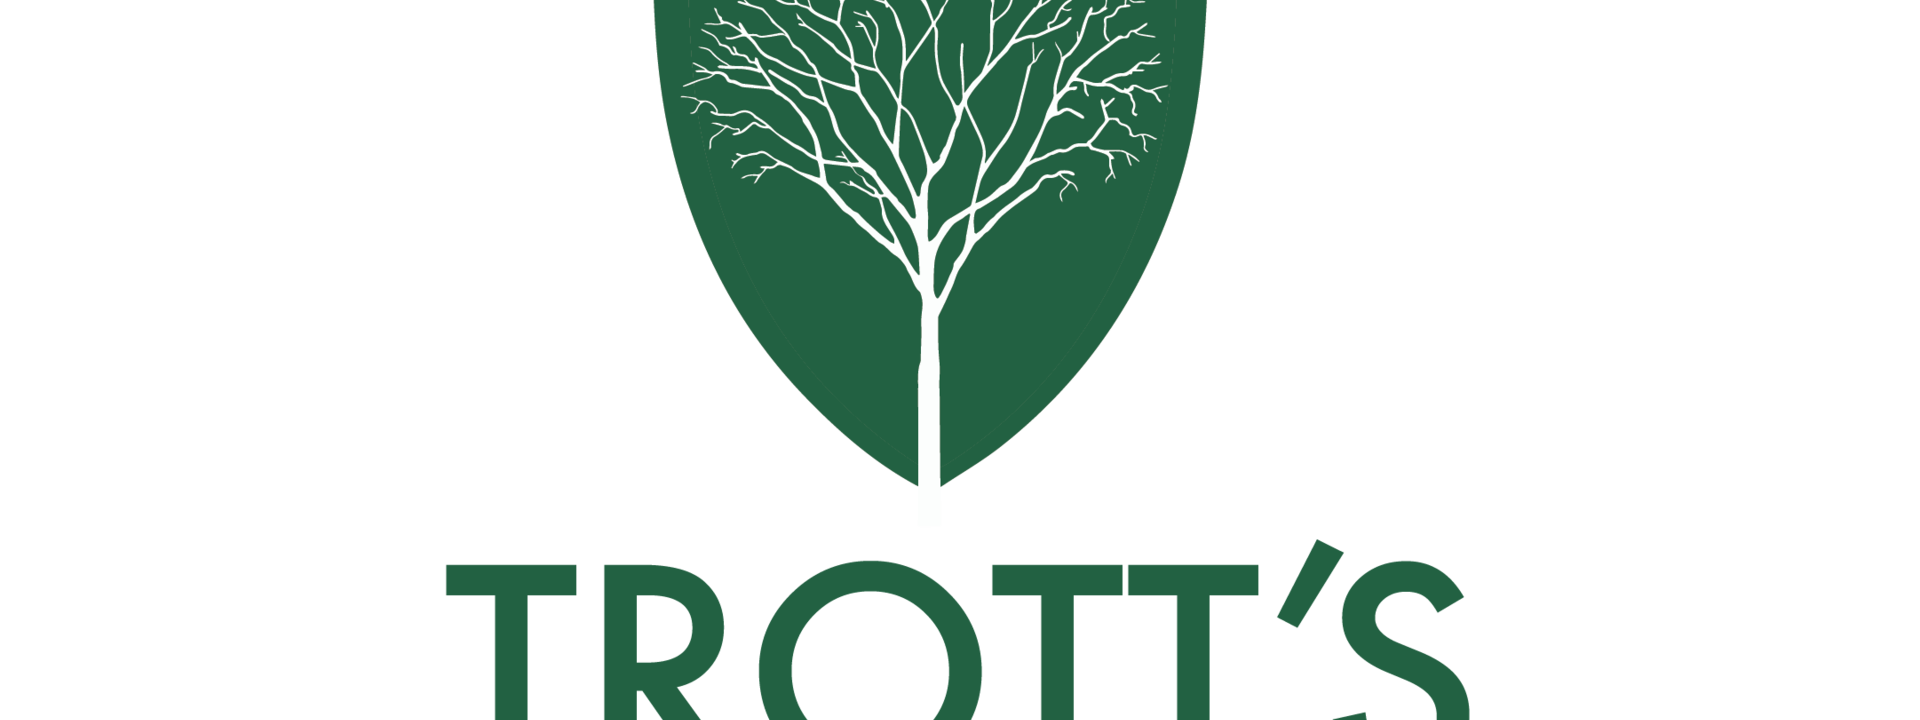 trotts-community-garden-logo-green-no-background-002.png